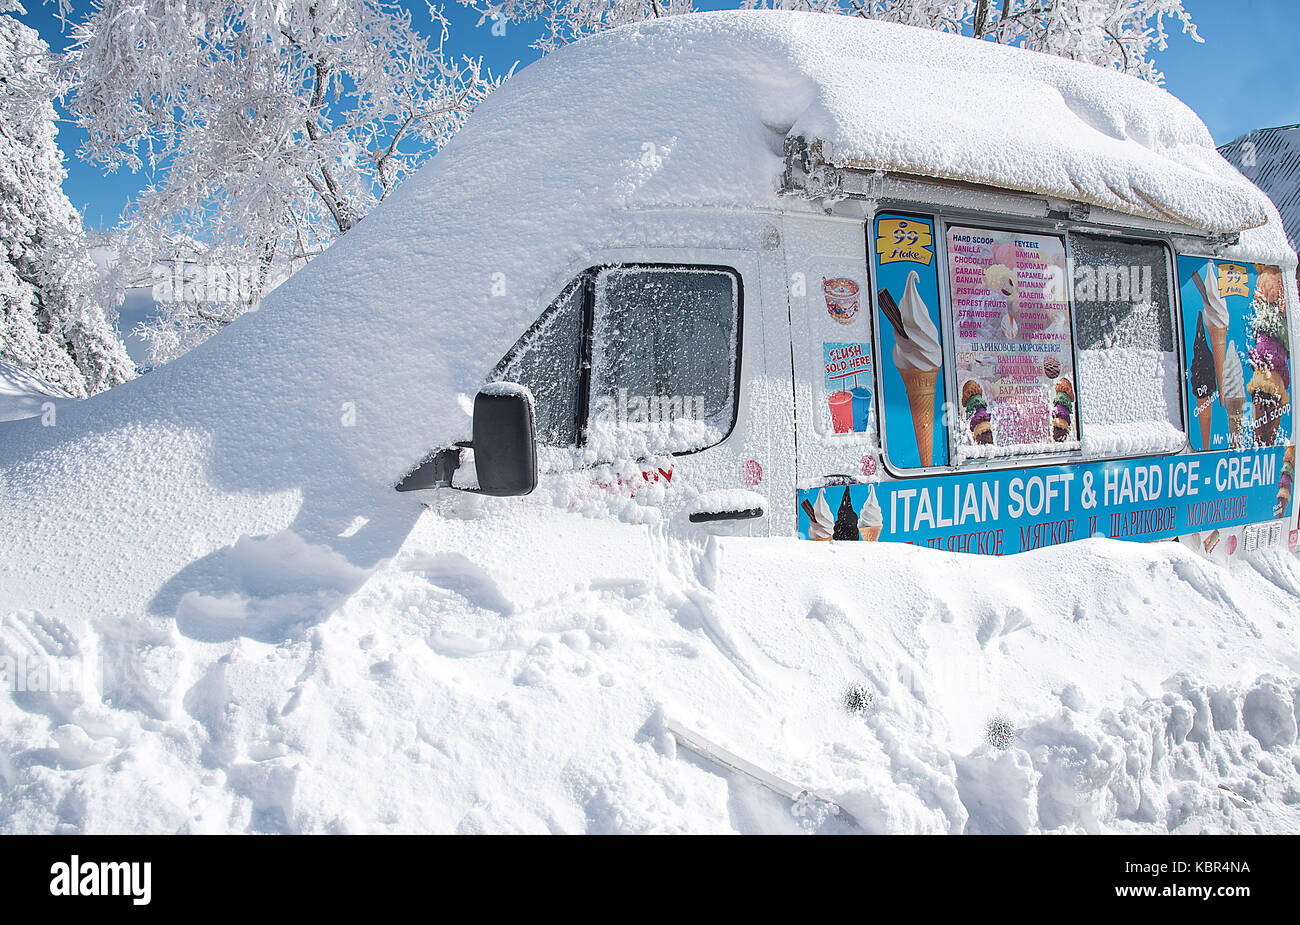 Ice cream van in the winter snow. Troodos Mountains, Cyprus Stock Photo -  Alamy